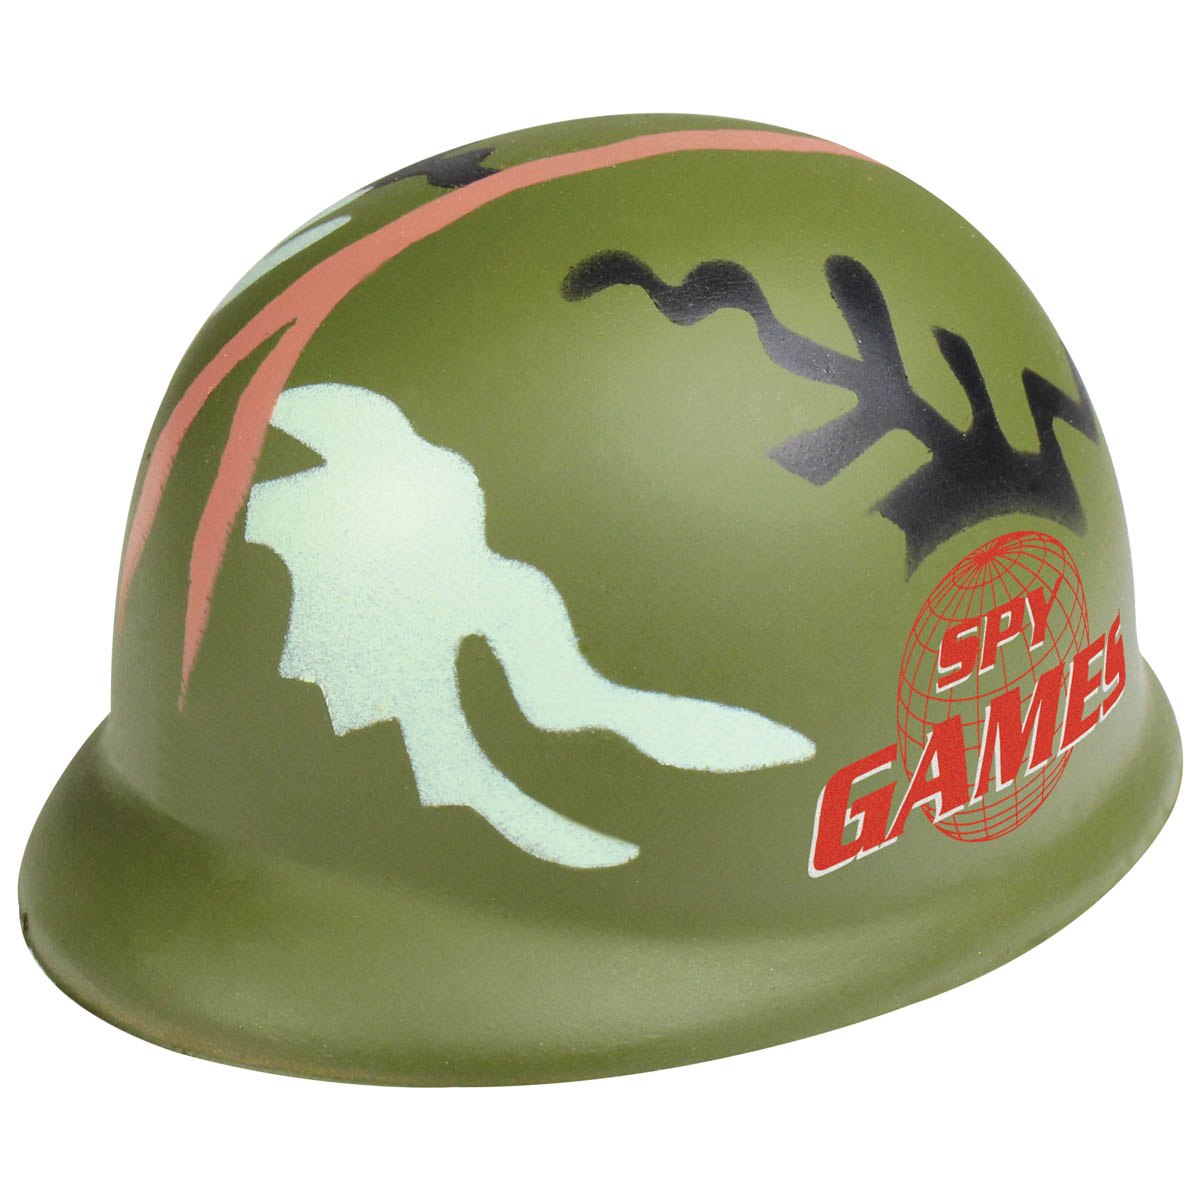 Stress Military Helmet